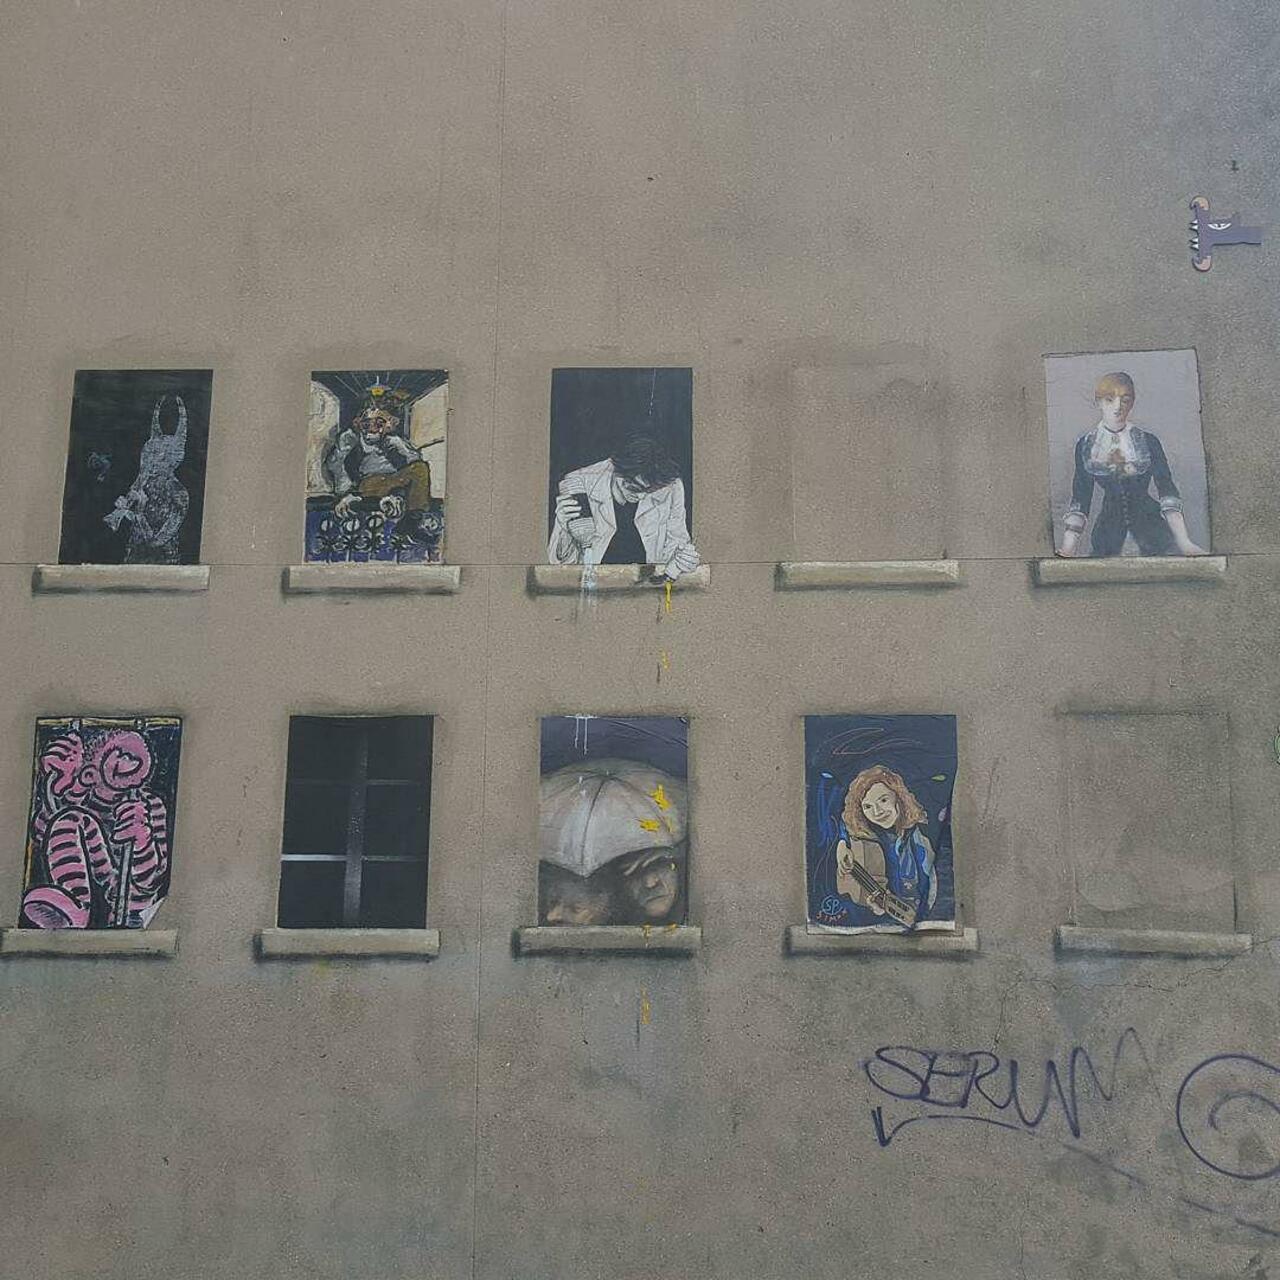 #Paris #graffiti photo by @jdewey67 http://ift.tt/1O6s1AY #StreetArt http://t.co/7r7rgKTCrb